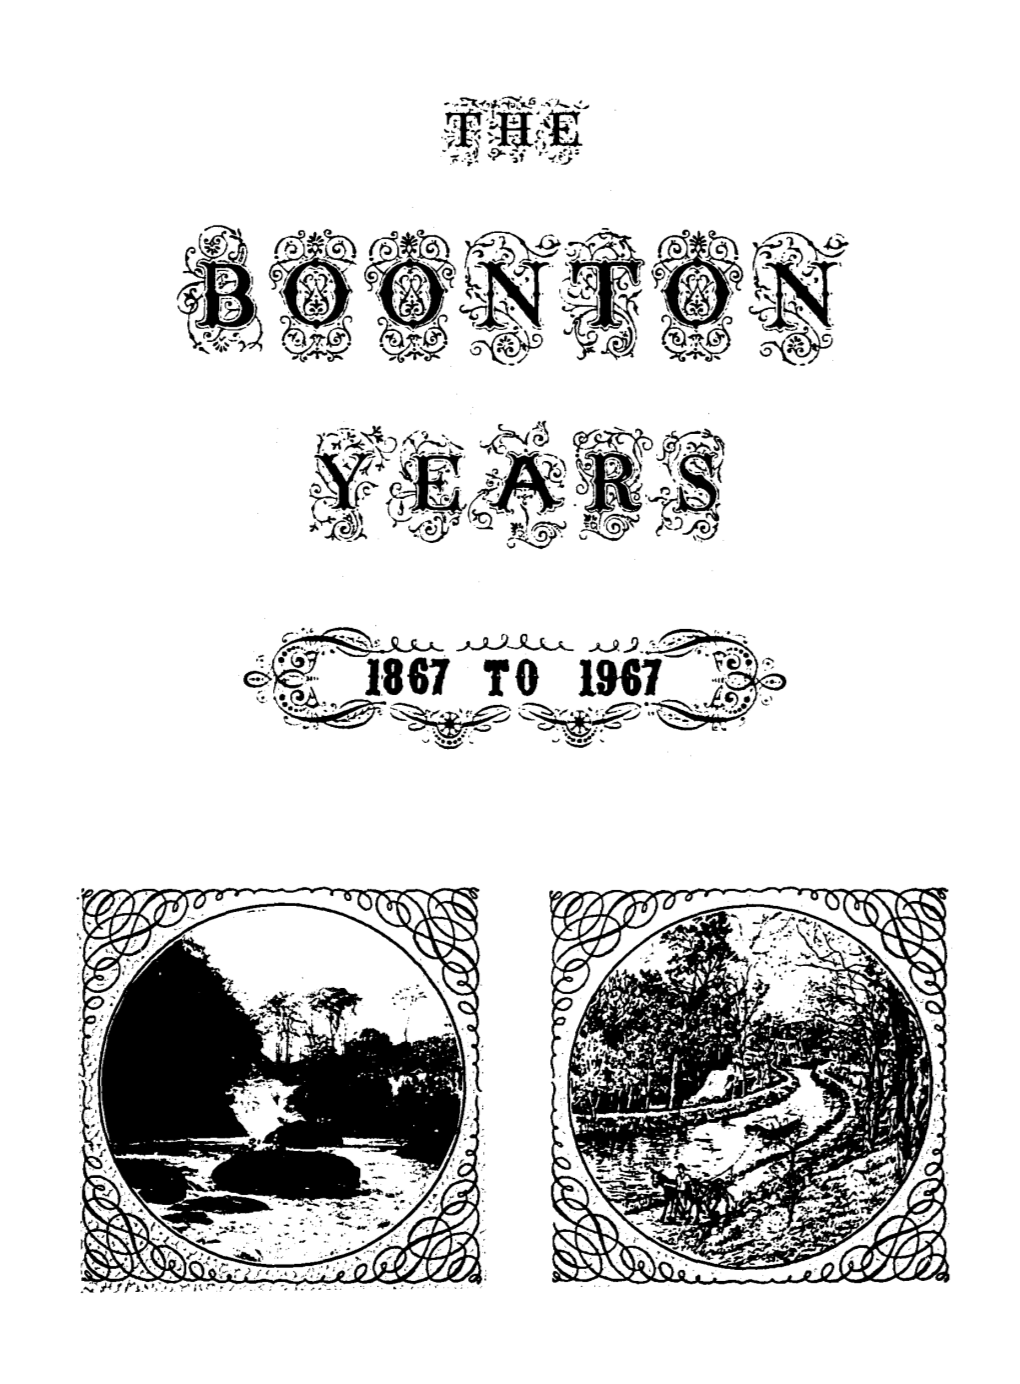 BOONTON on ITS 100Th ANNIVERSARY